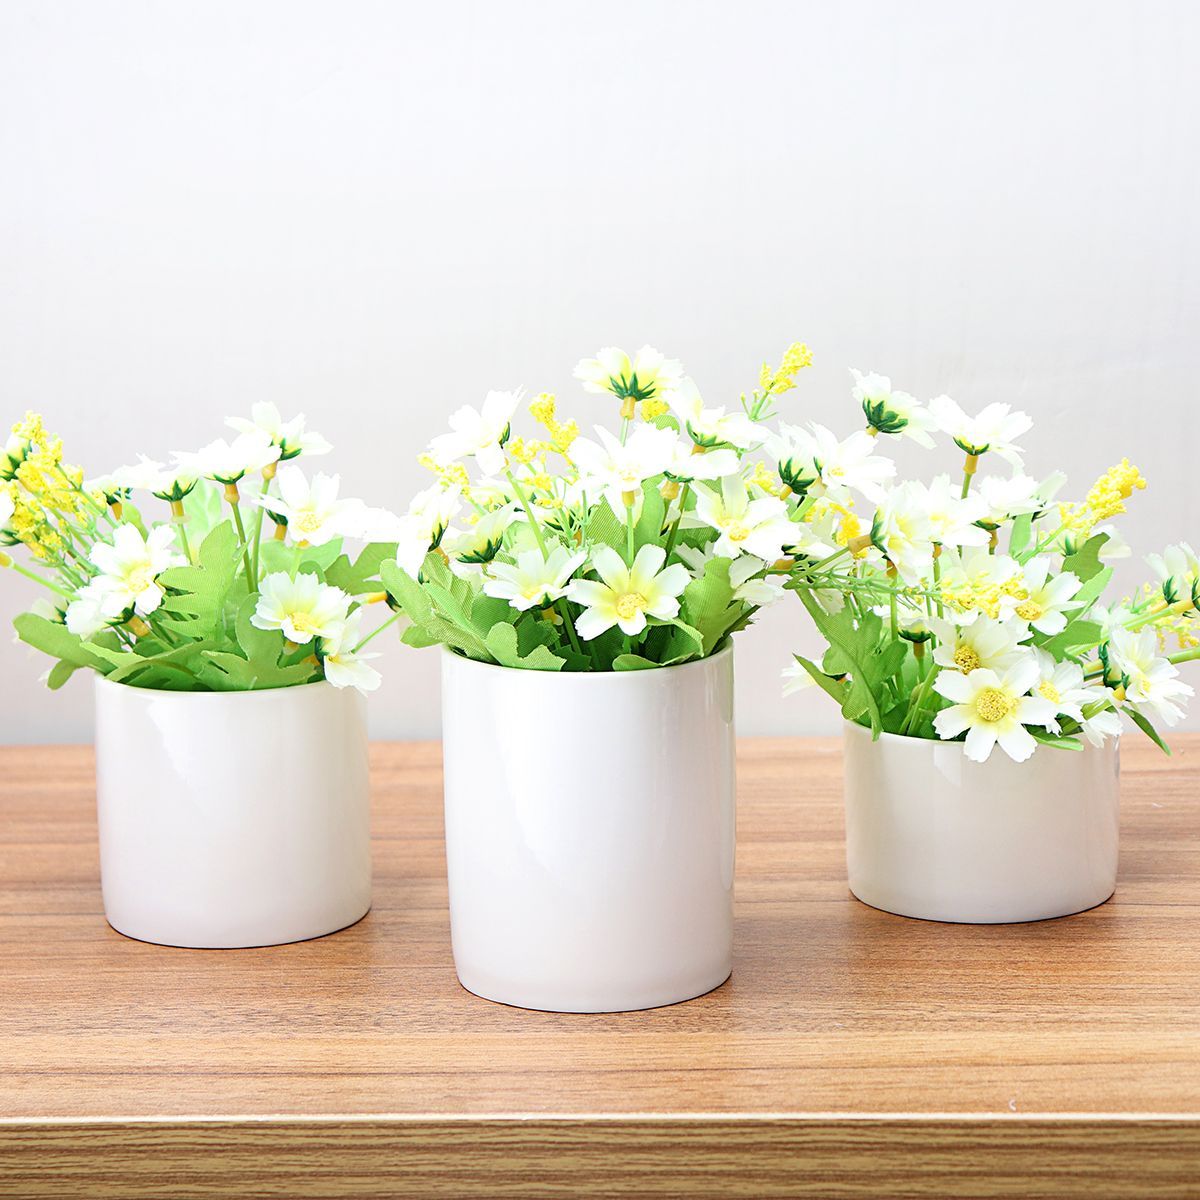 White-Ceramic-Flower-Pot-Plant-Succulent-Nordic-Rack-Display-Stand-Holder-Hydroponic-Planter-Decor-1332924